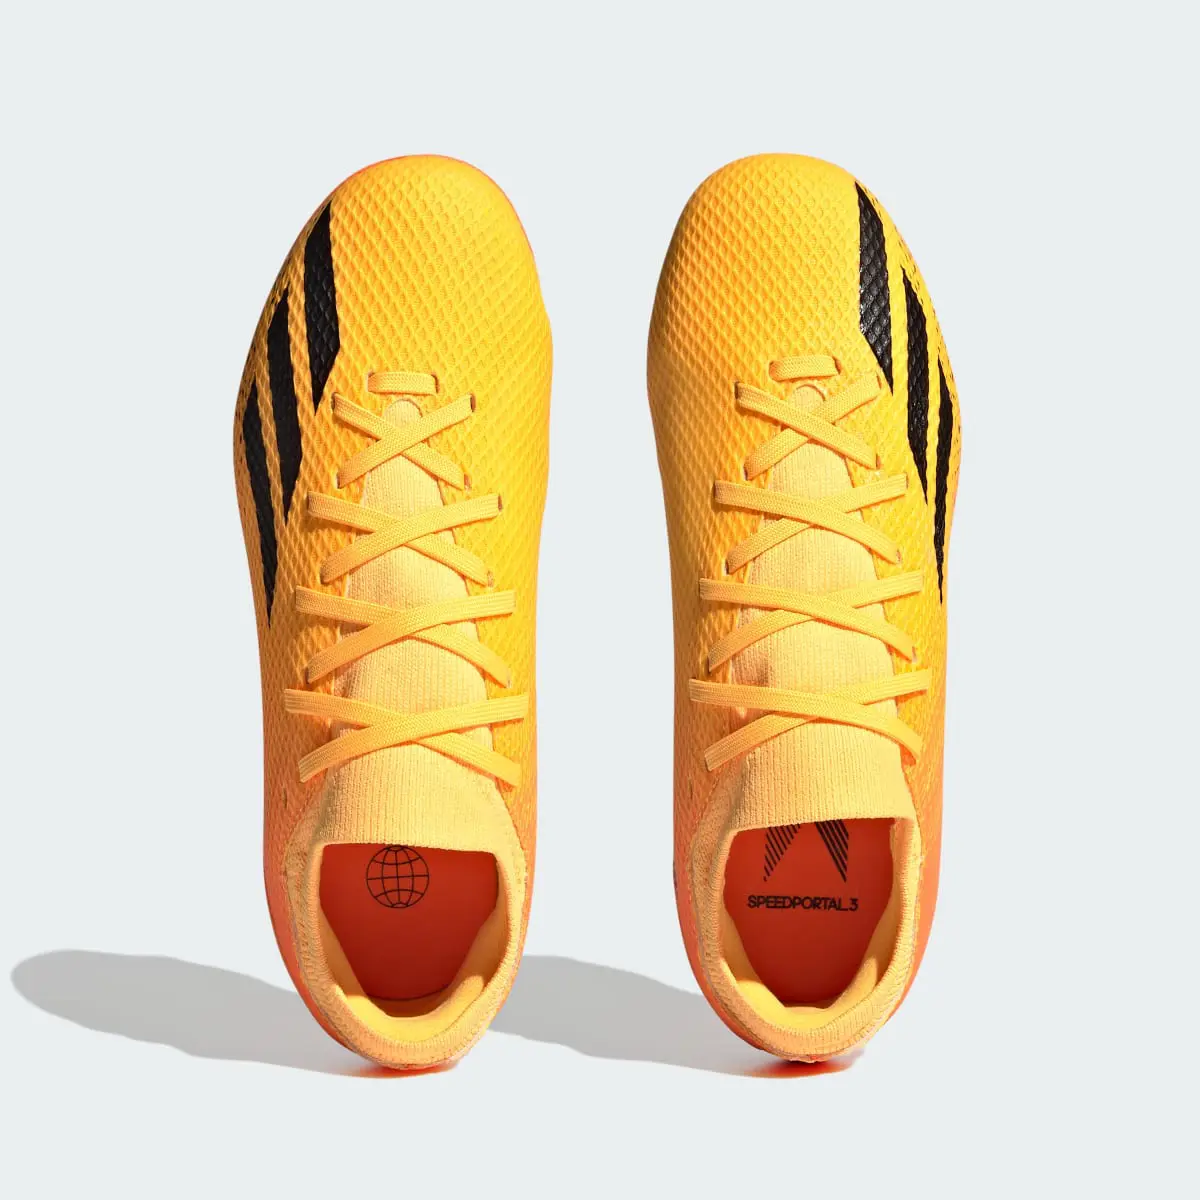 Adidas Botas de Futebol X Speedportal.3 – Piso firme. 3